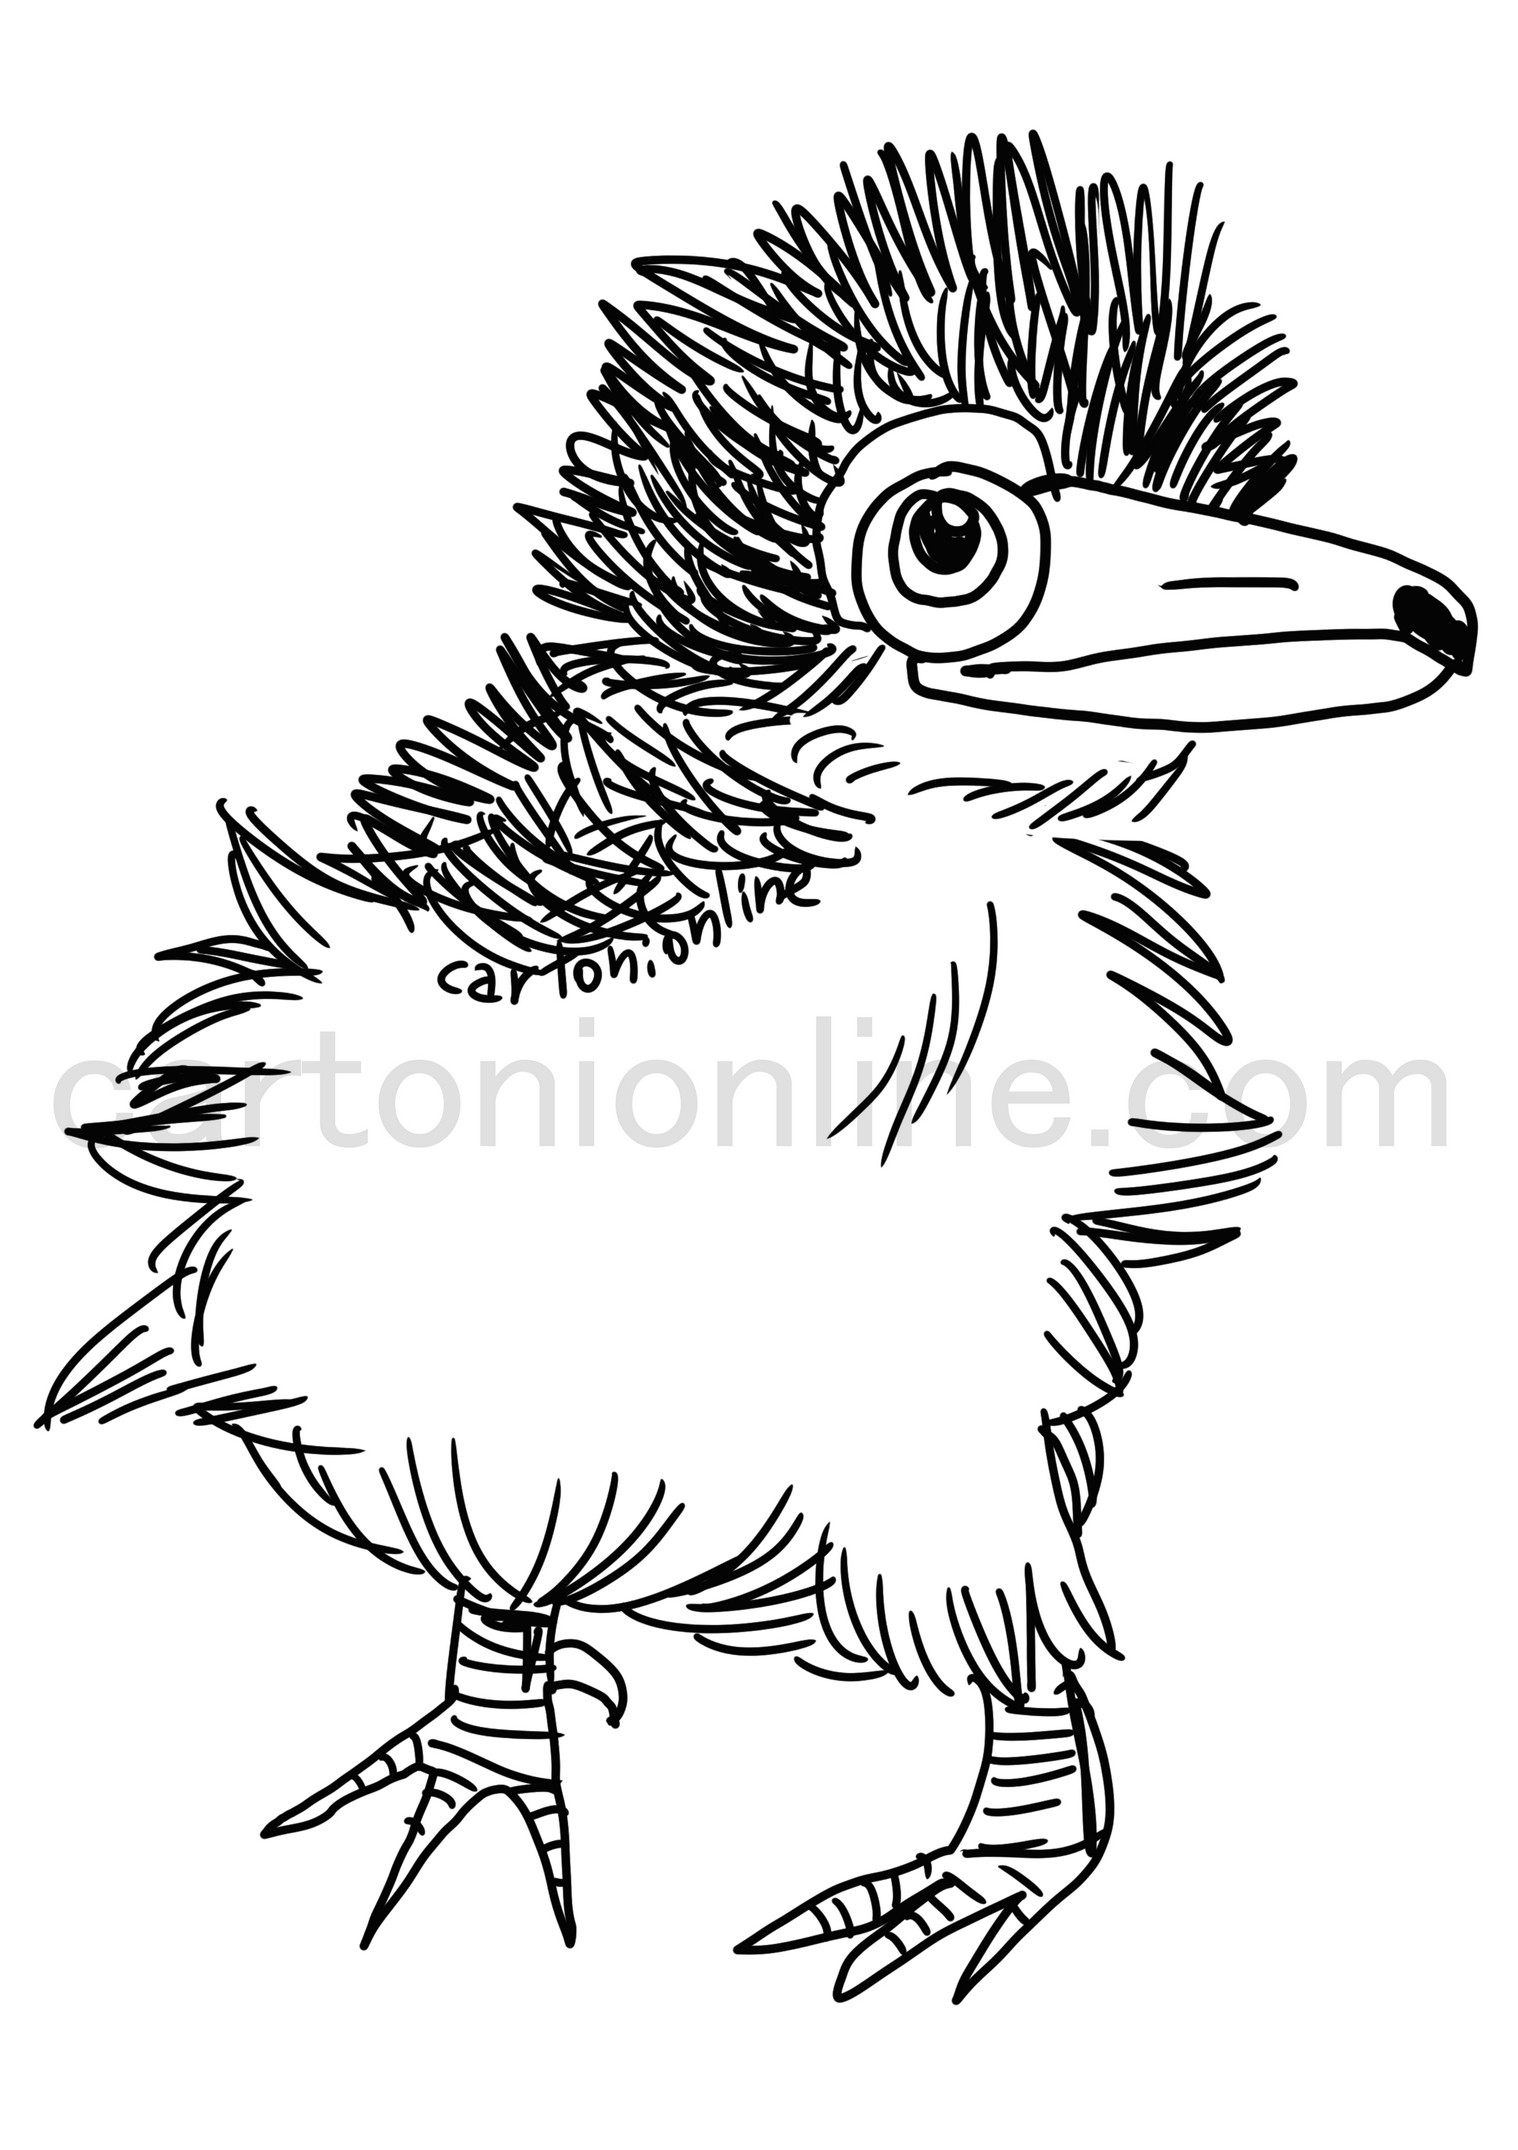 Heron chick målarbok